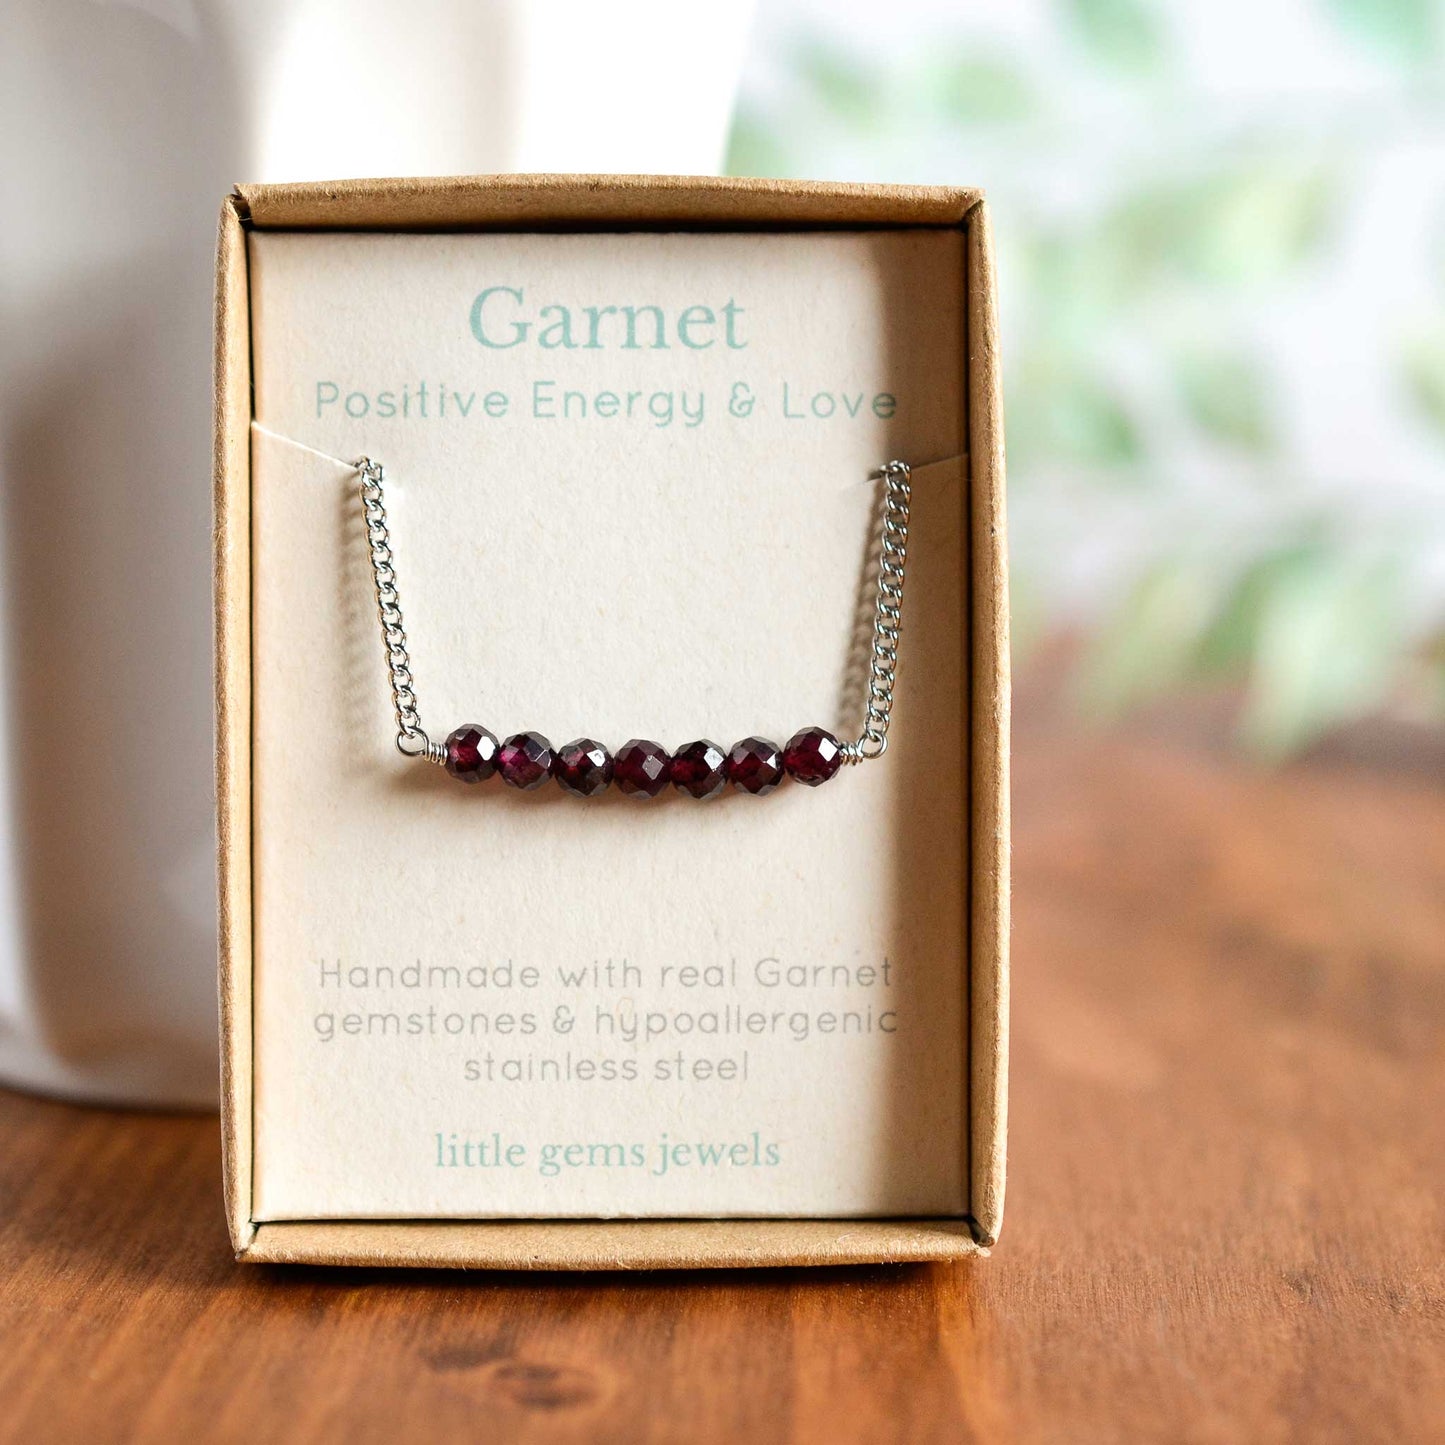 Dainty Garnet gemstone necklace in gift box